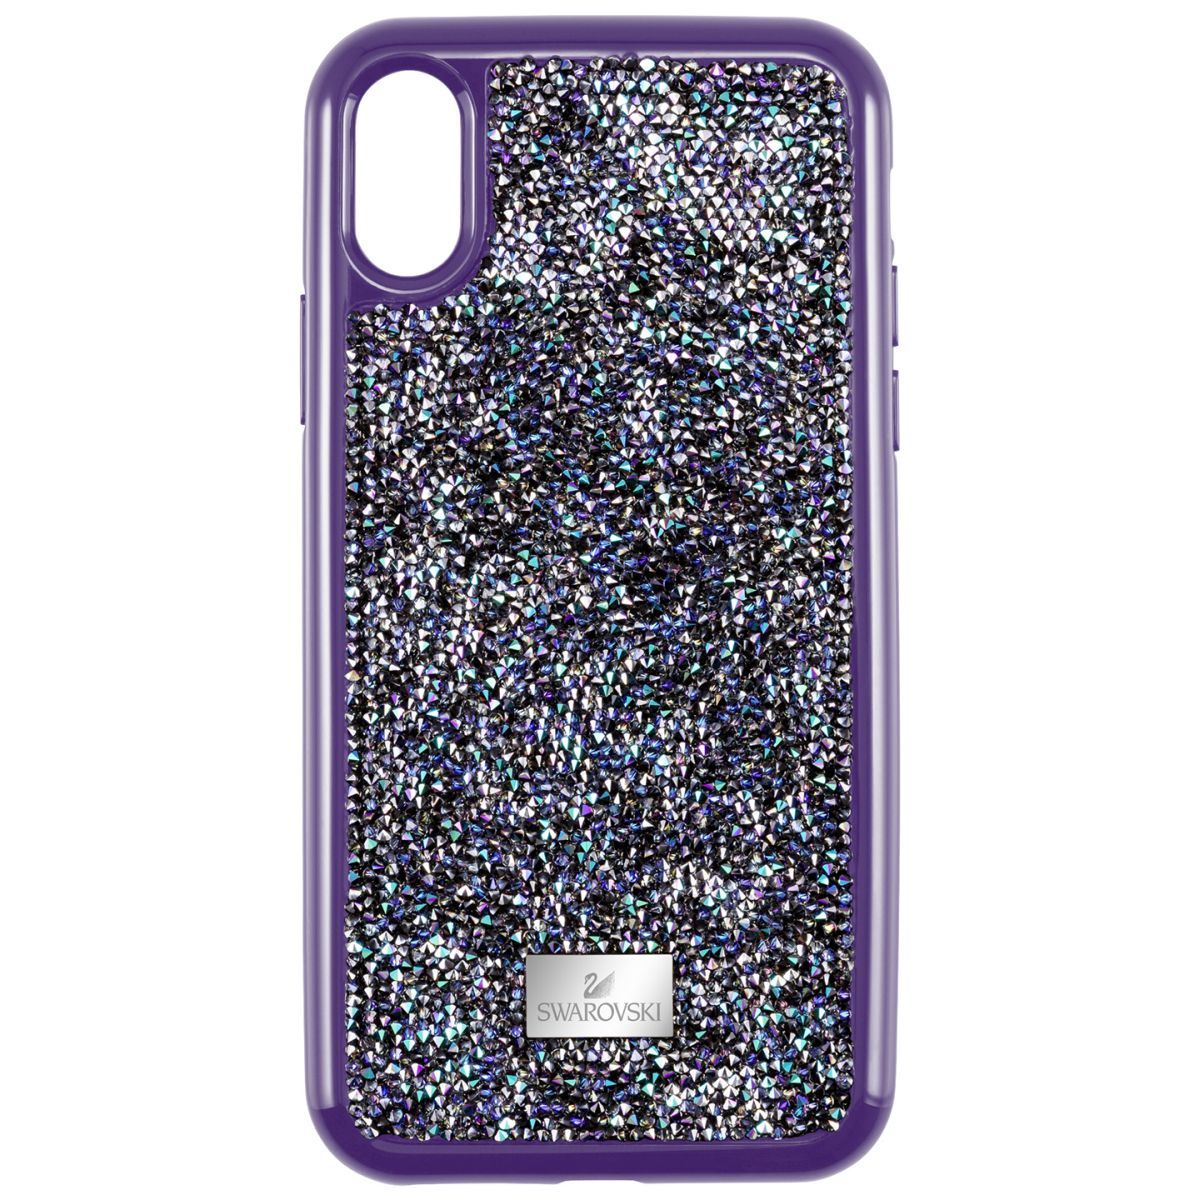 Swarovski Glam Rock Purple Smartphone Bumper, iPhone XS Max